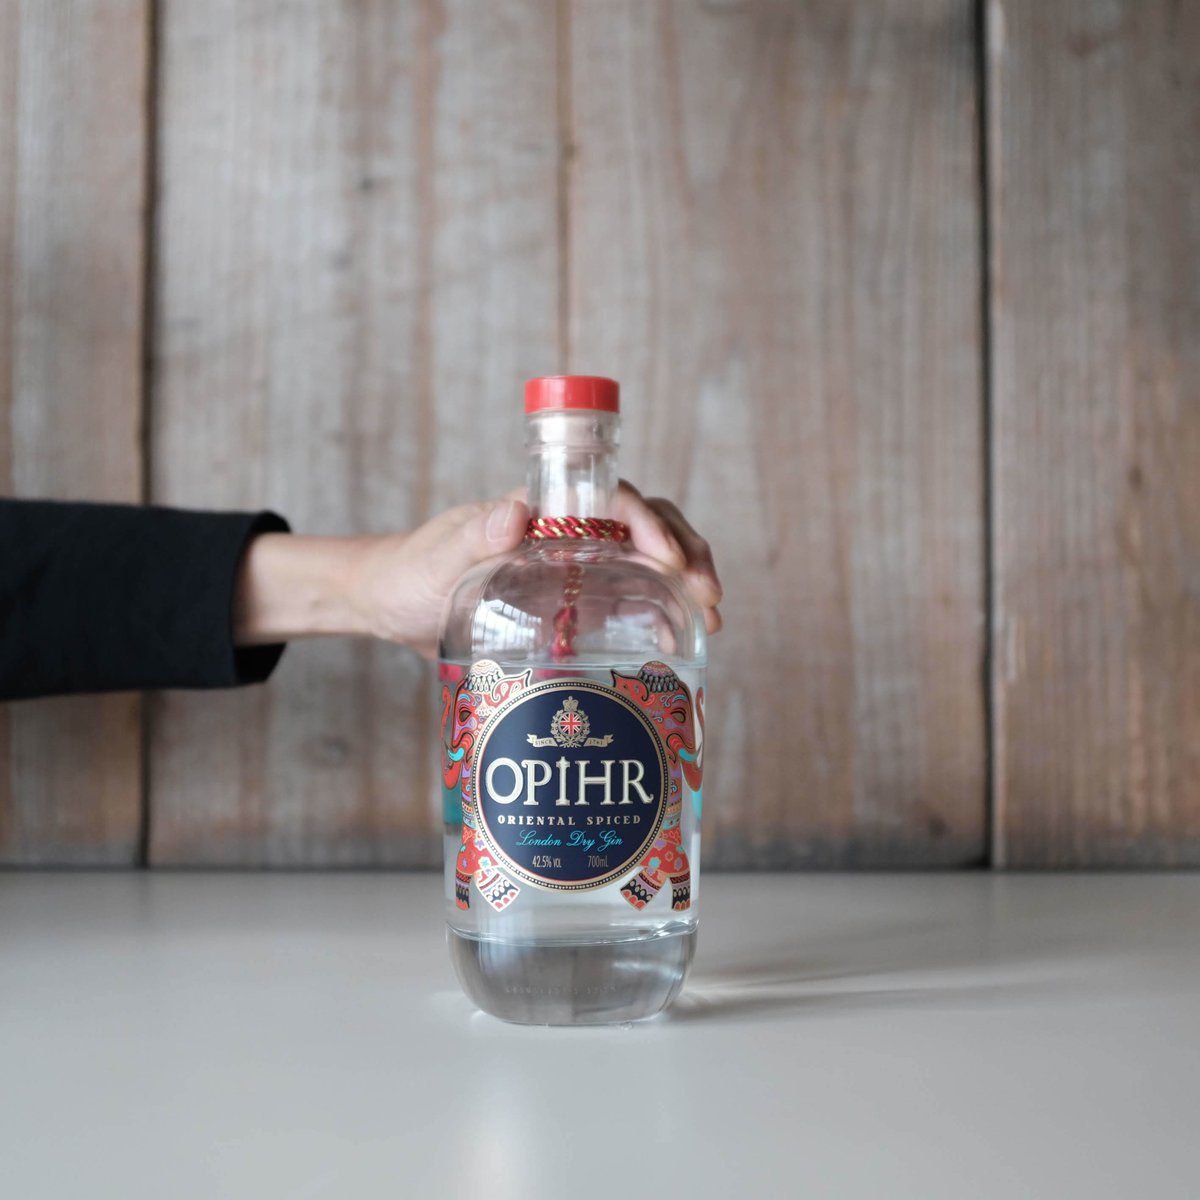 OPIHR ORIENTAL SPICED LONDON DRY GIN | GIN | Gin